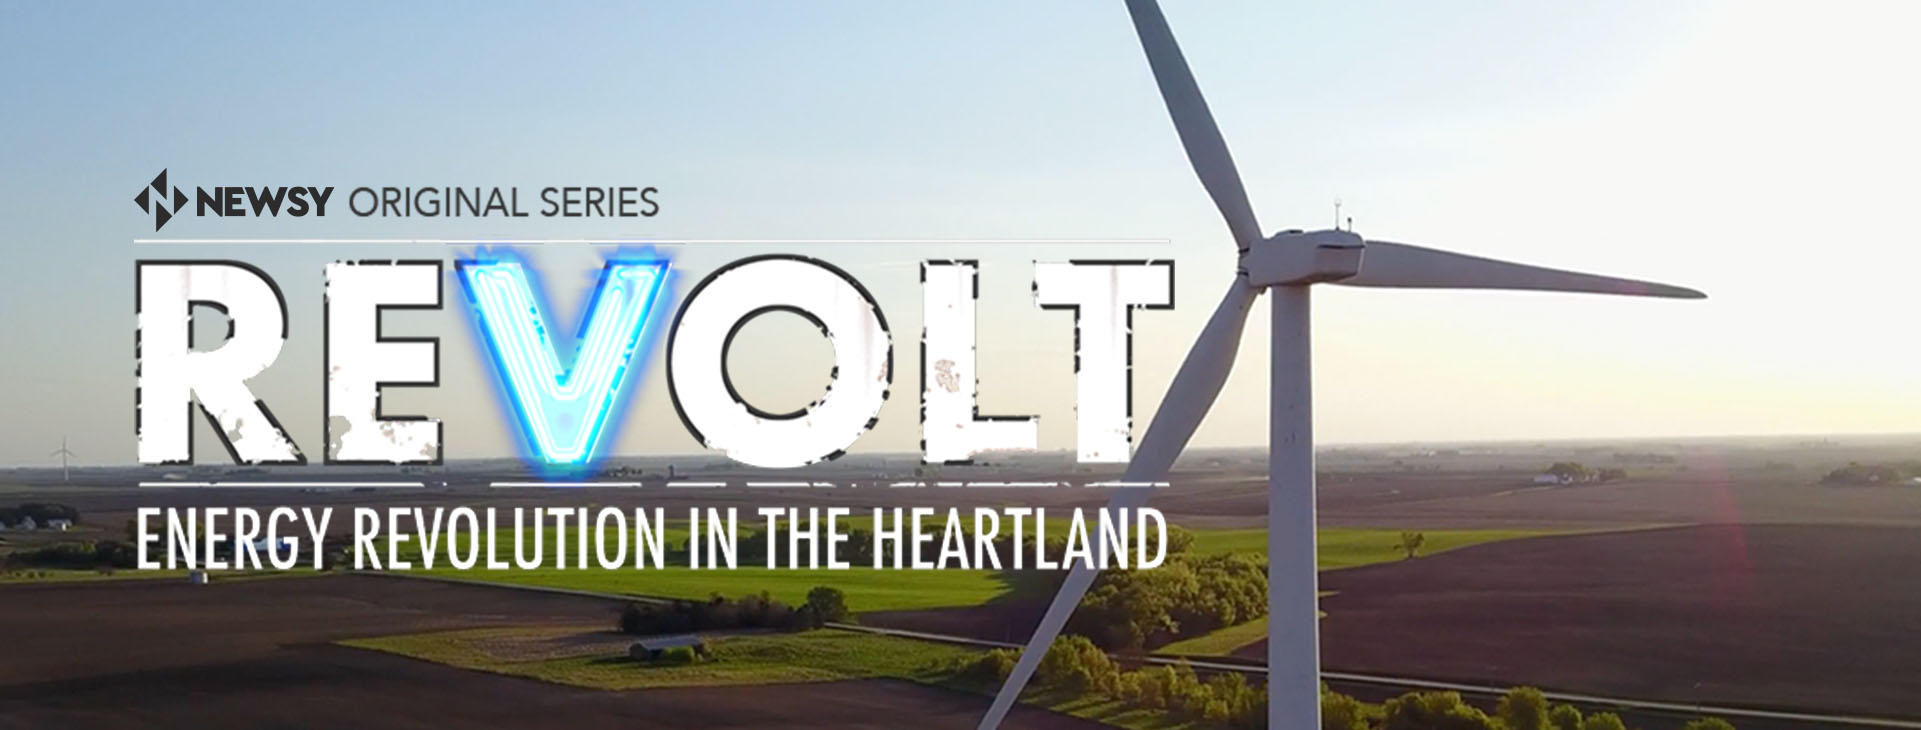 Revolt: Energy Revolution in the Heartland Newsy original series logo